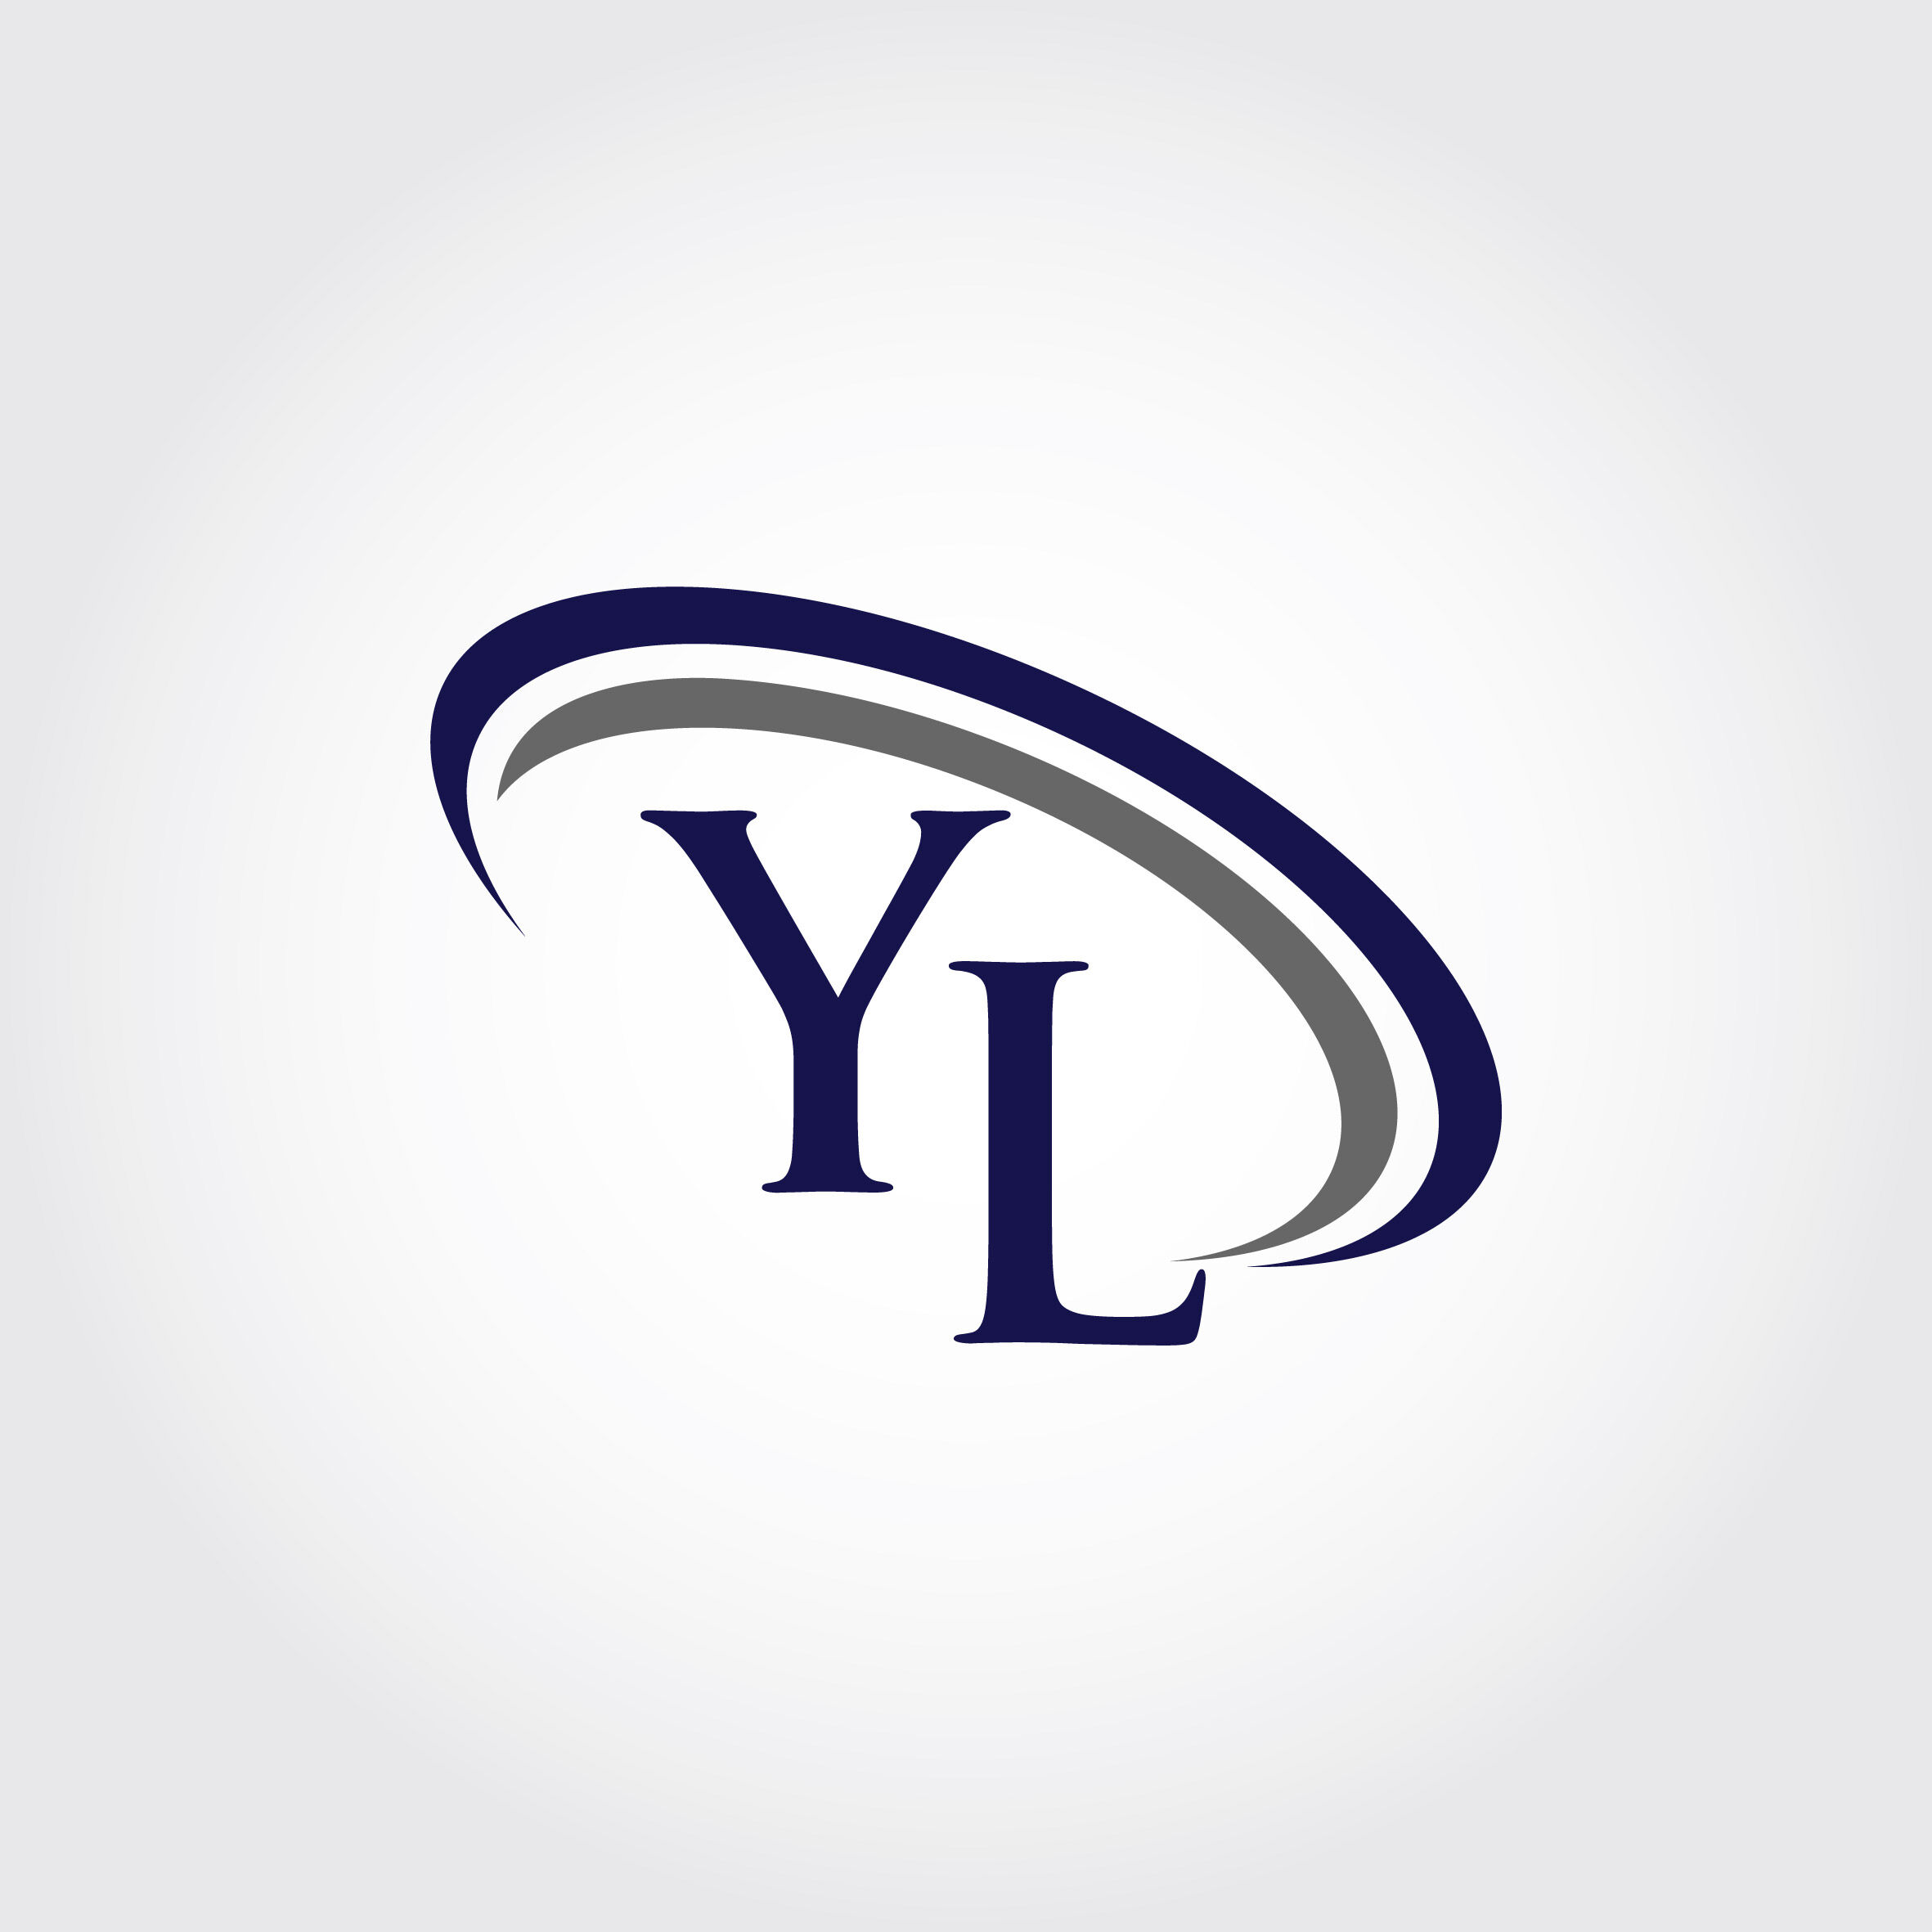 yl logo design